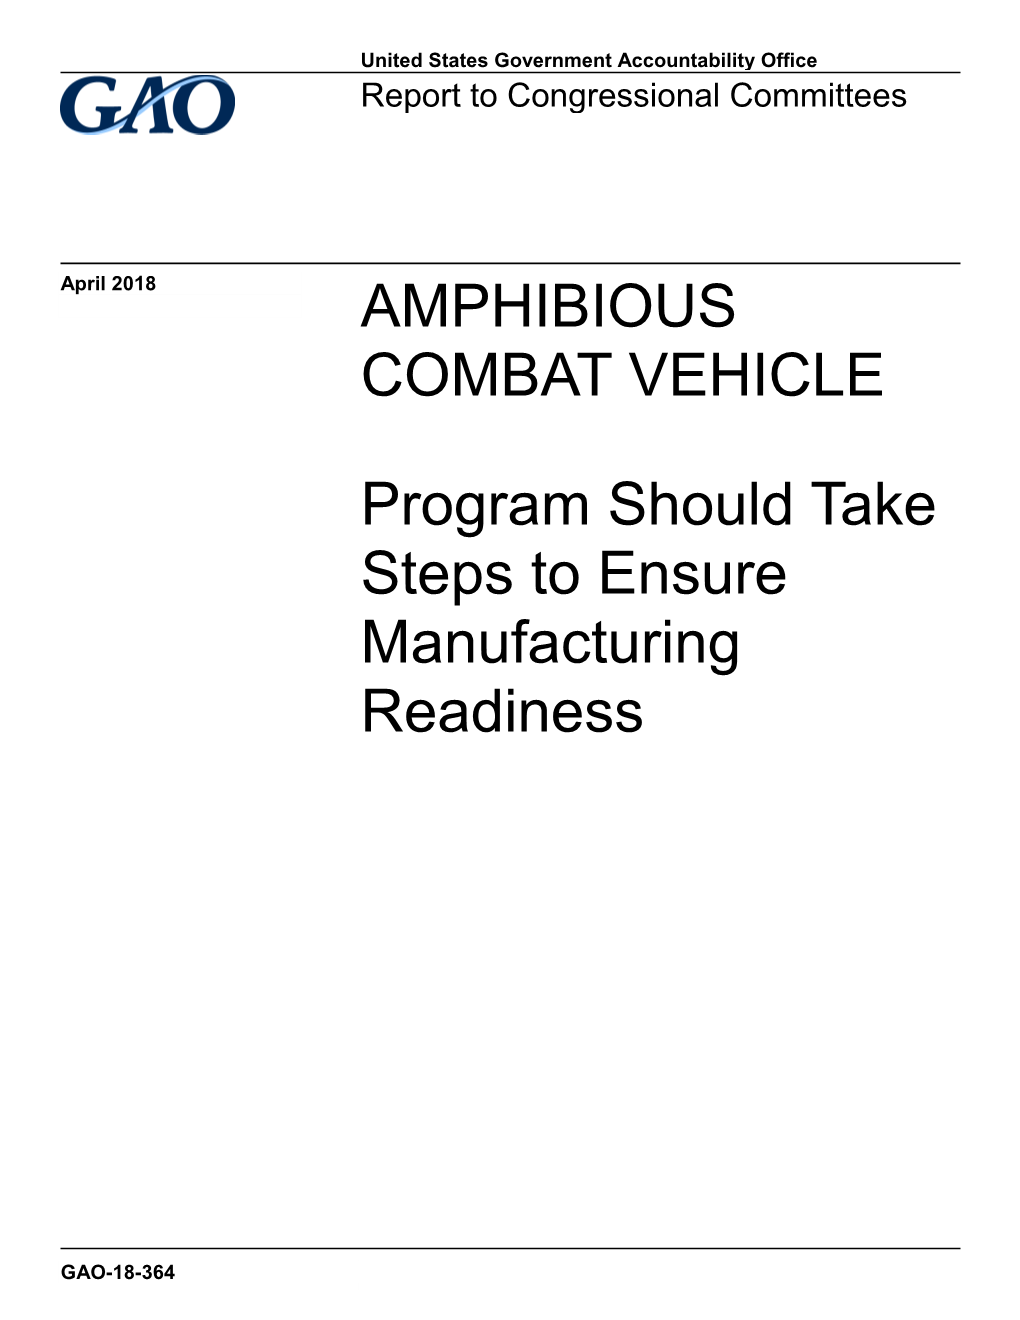 GAO-18-364, AMPHIBIOUS COMBAT VEHICLE: Program Should Take